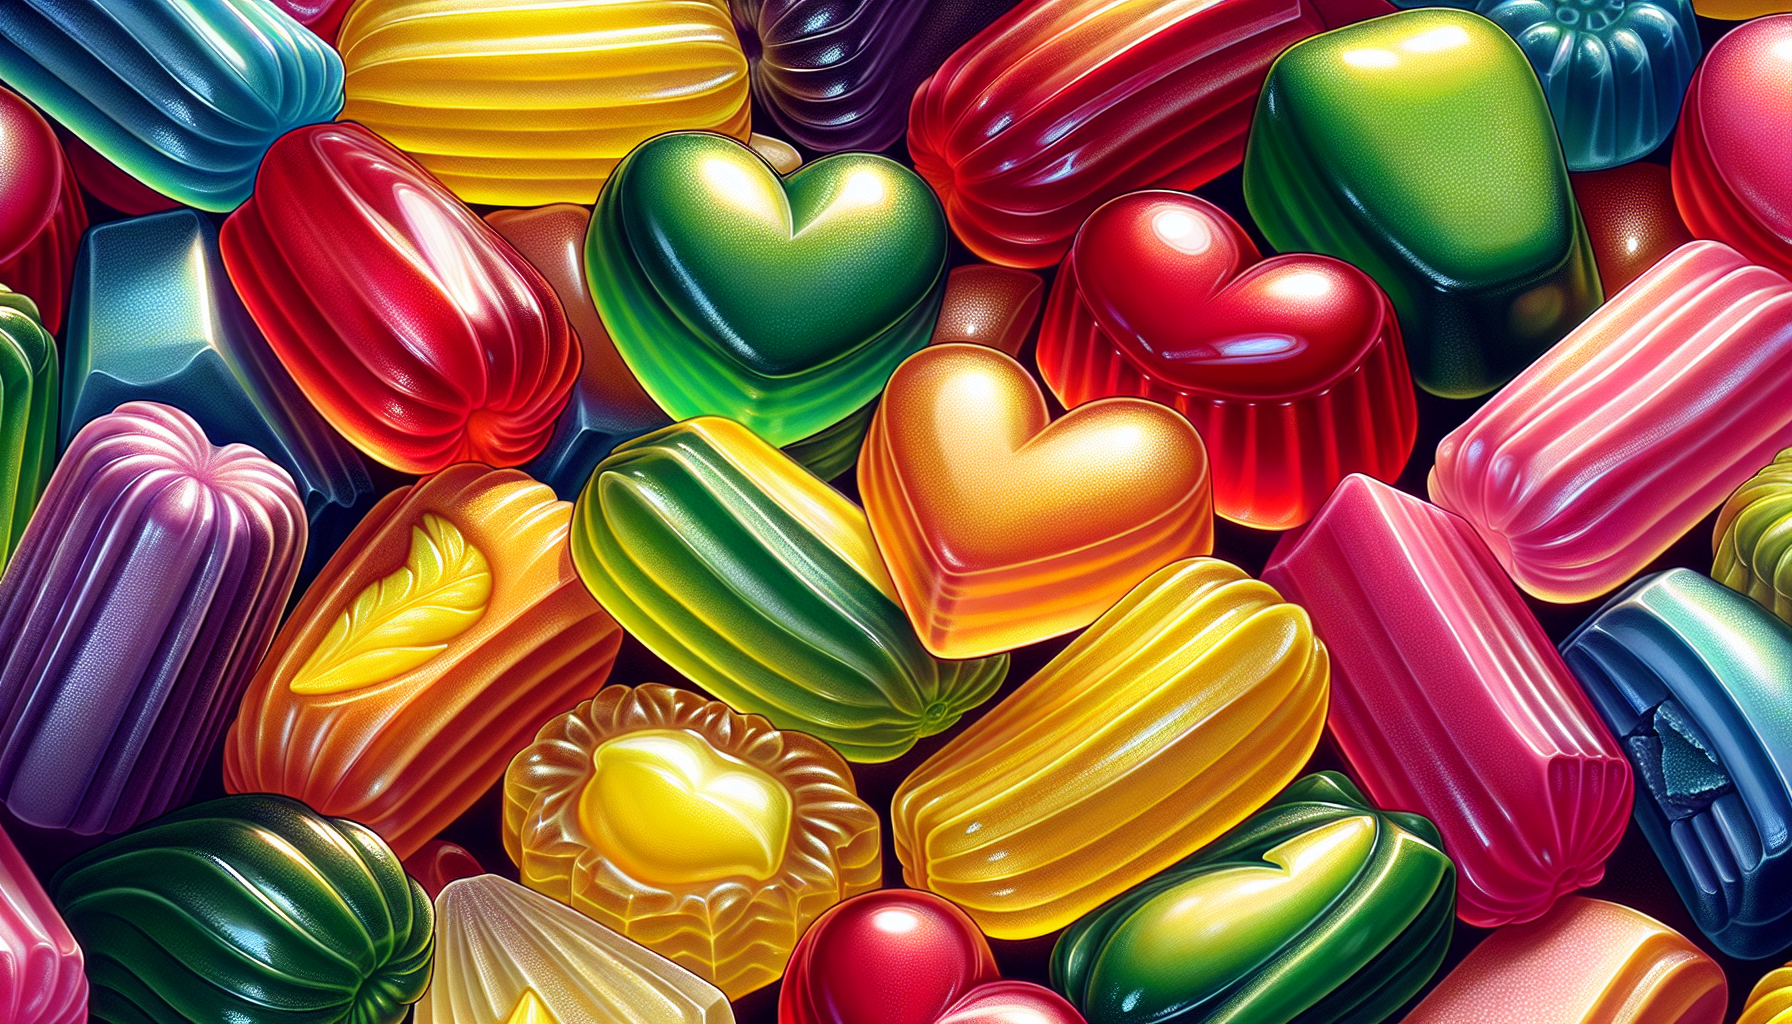 Close-up of Runts candy shells